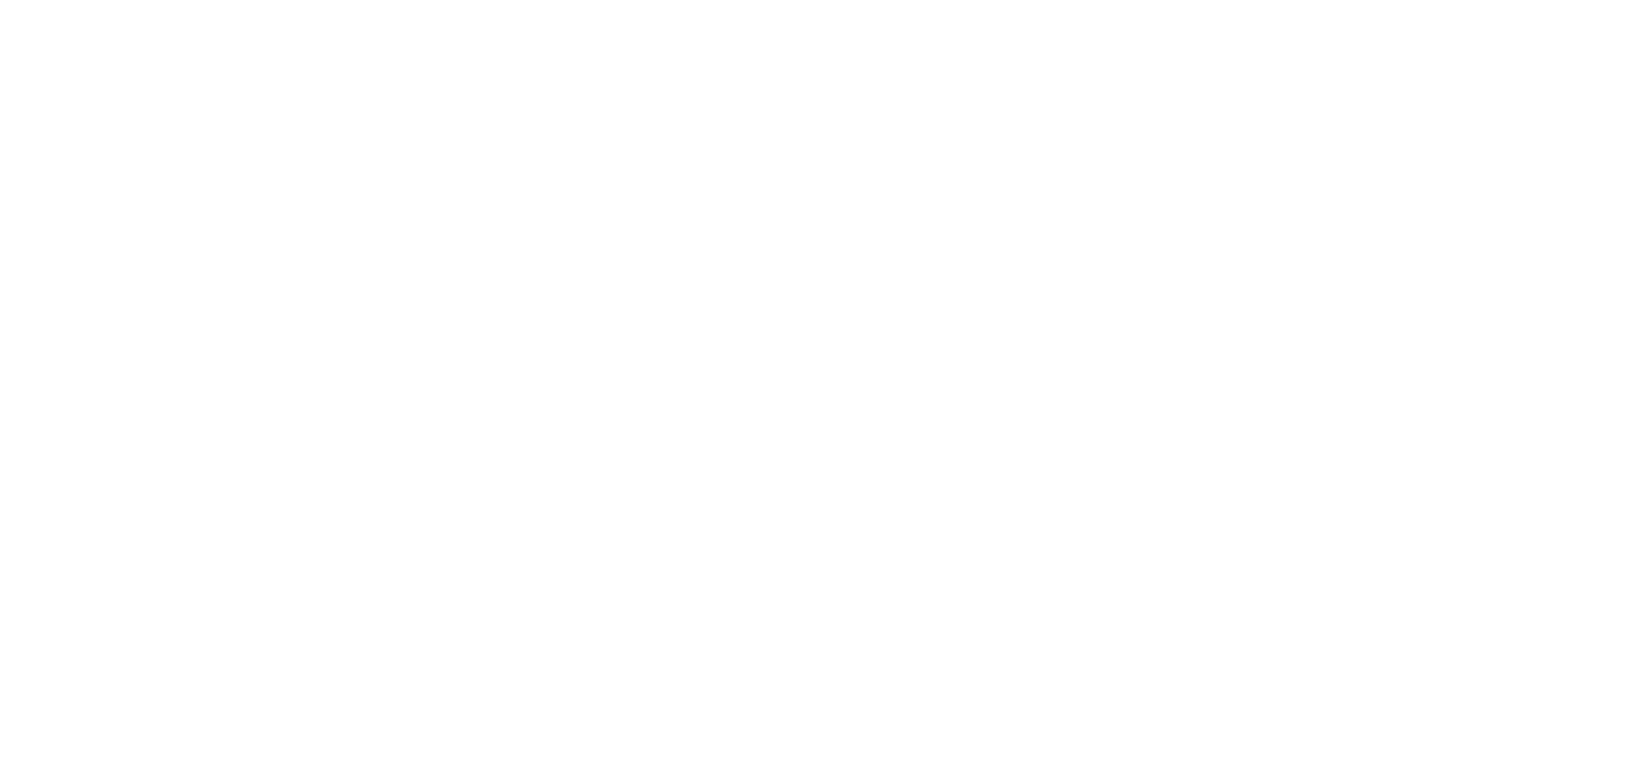  MyAlberta Digital ID Information